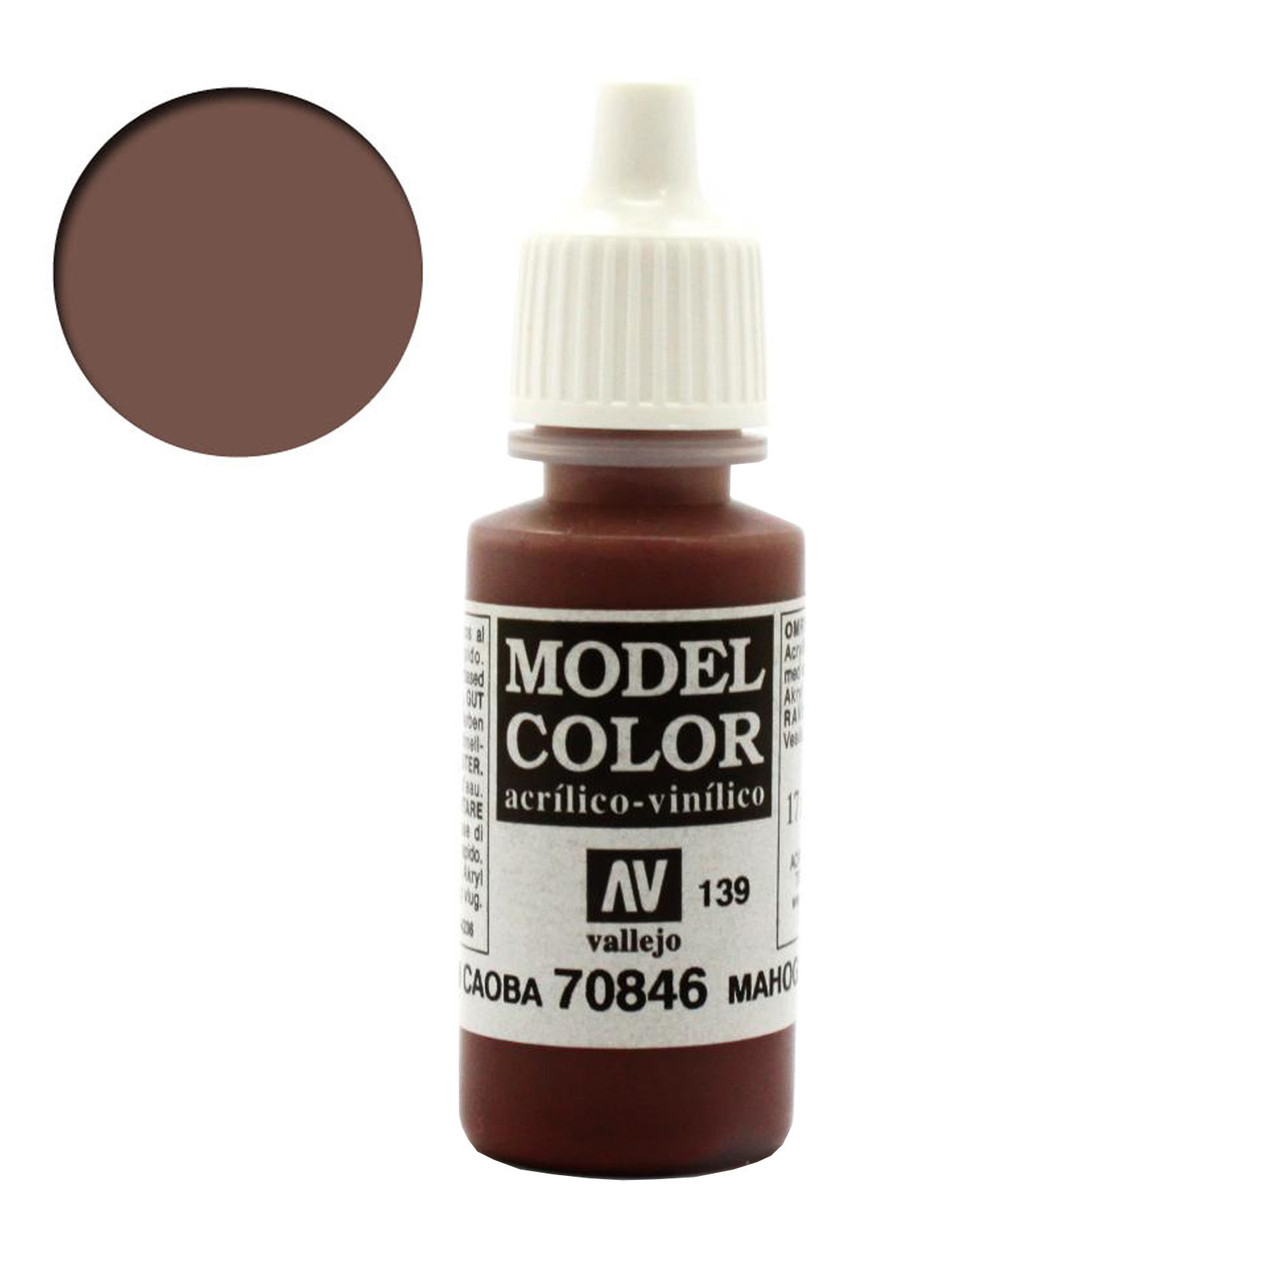 Vallejo Model Color acrylic paint - 70.846 Mahogany Brown